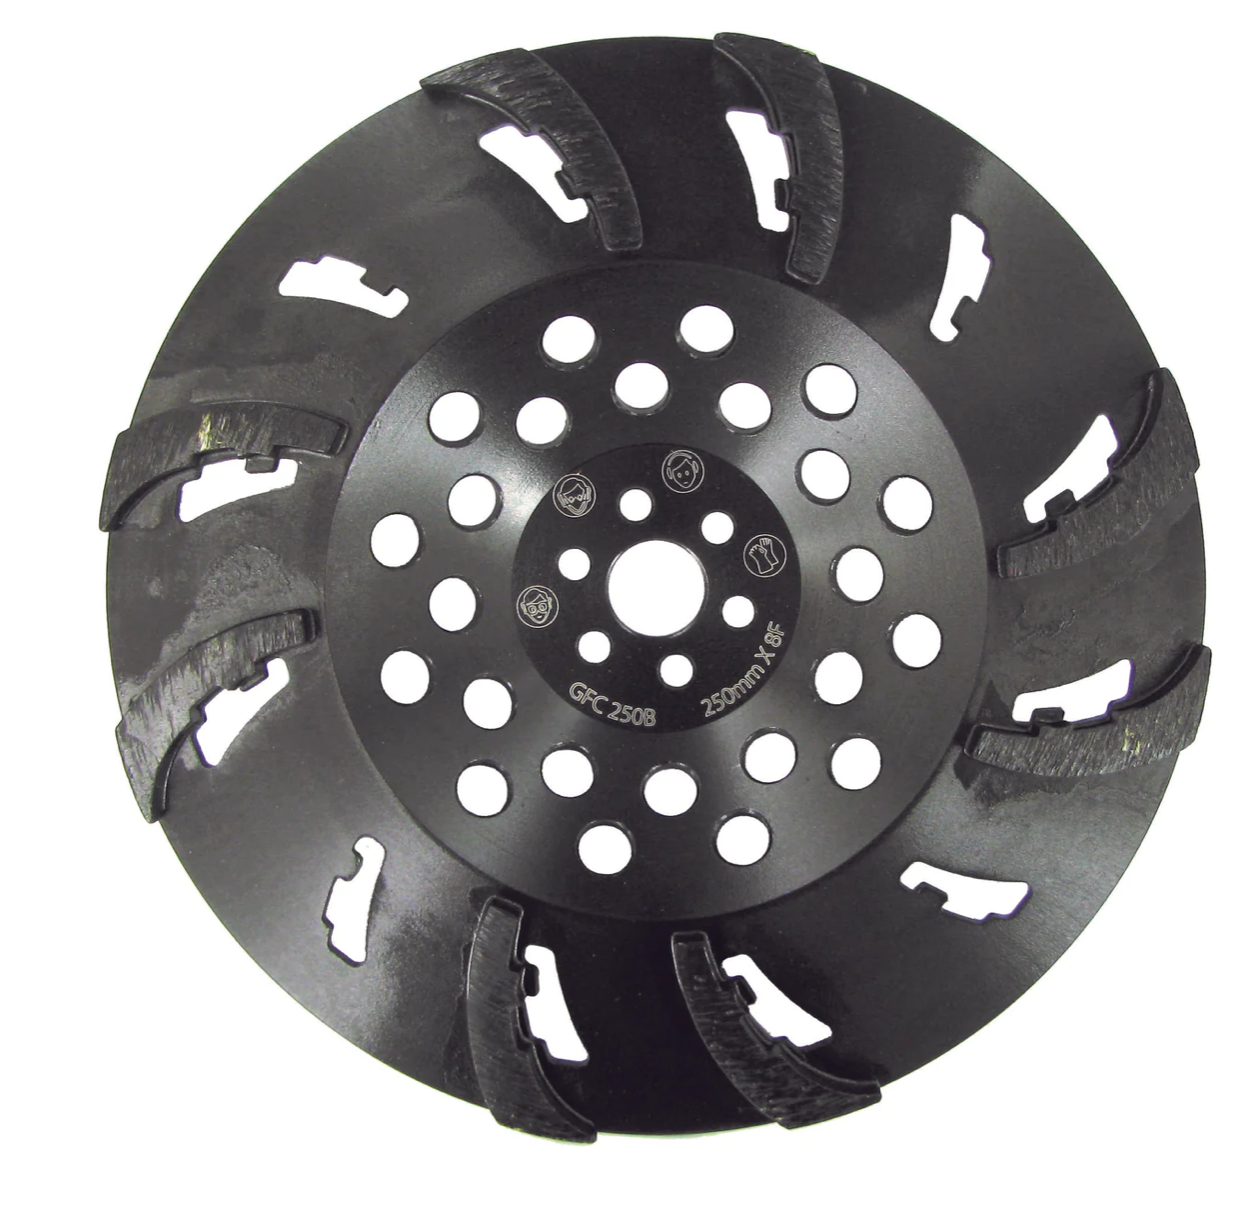 Tusk F Segments Cup Grinding Wheel - 250Mm X 8F 16# Black